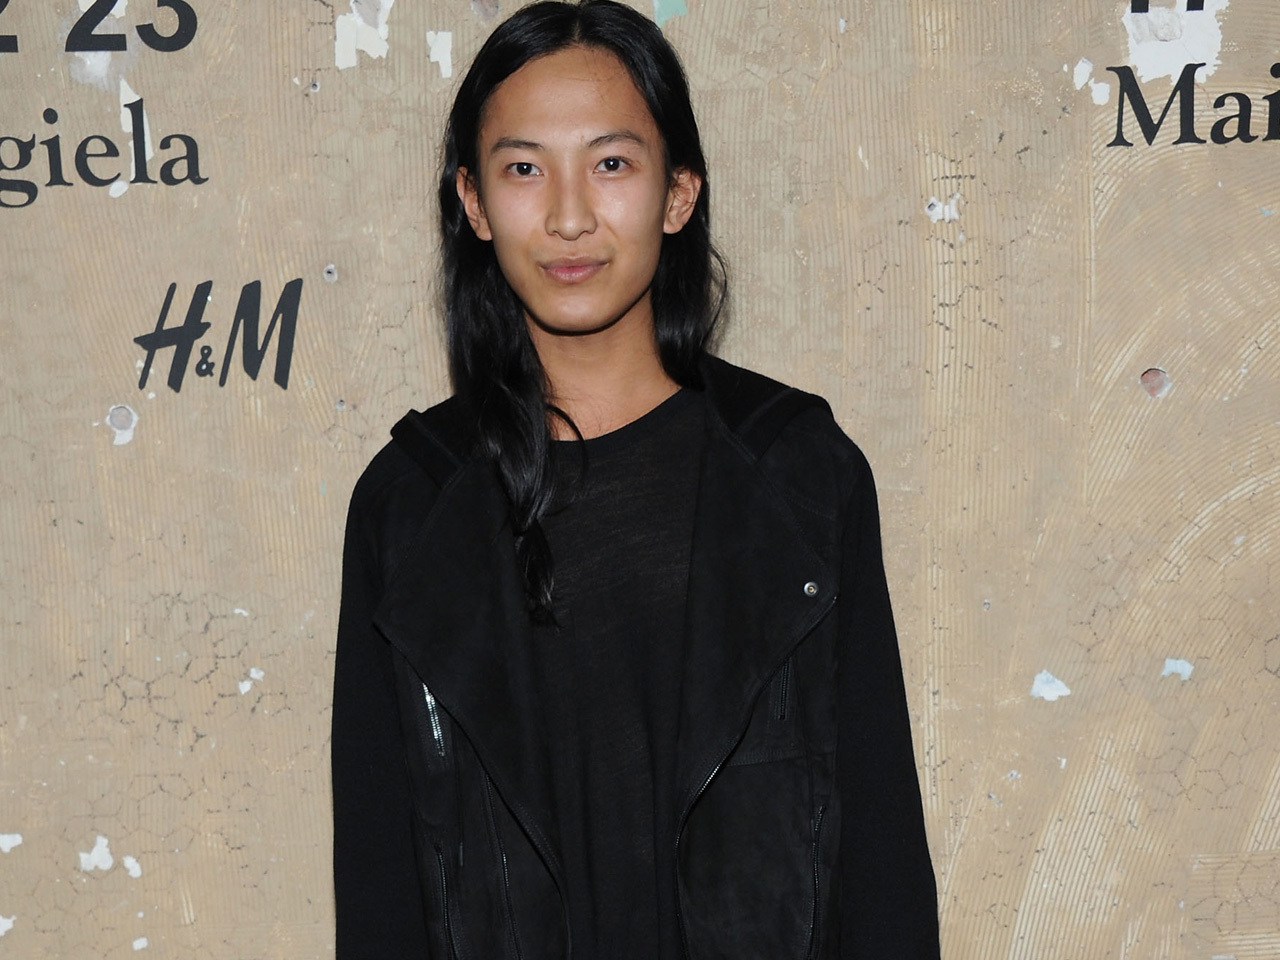 Designer Alexander Wang parts ways with Balenciaga